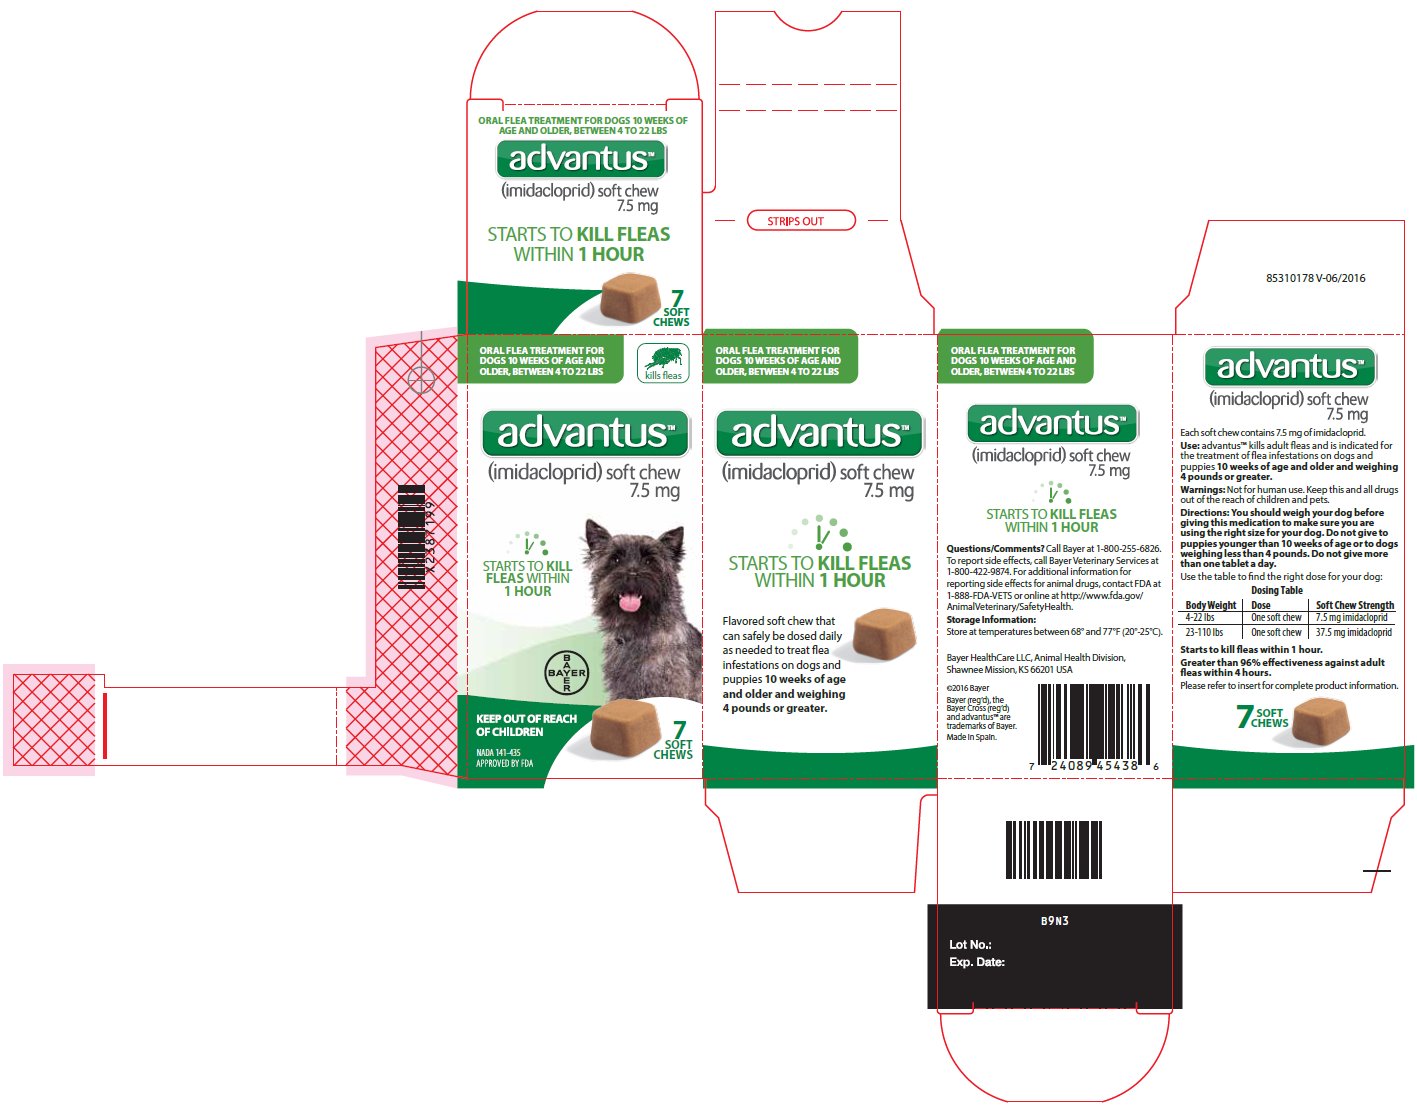 advantus™ (imidacloprid) soft chew 7.5 mg carton label